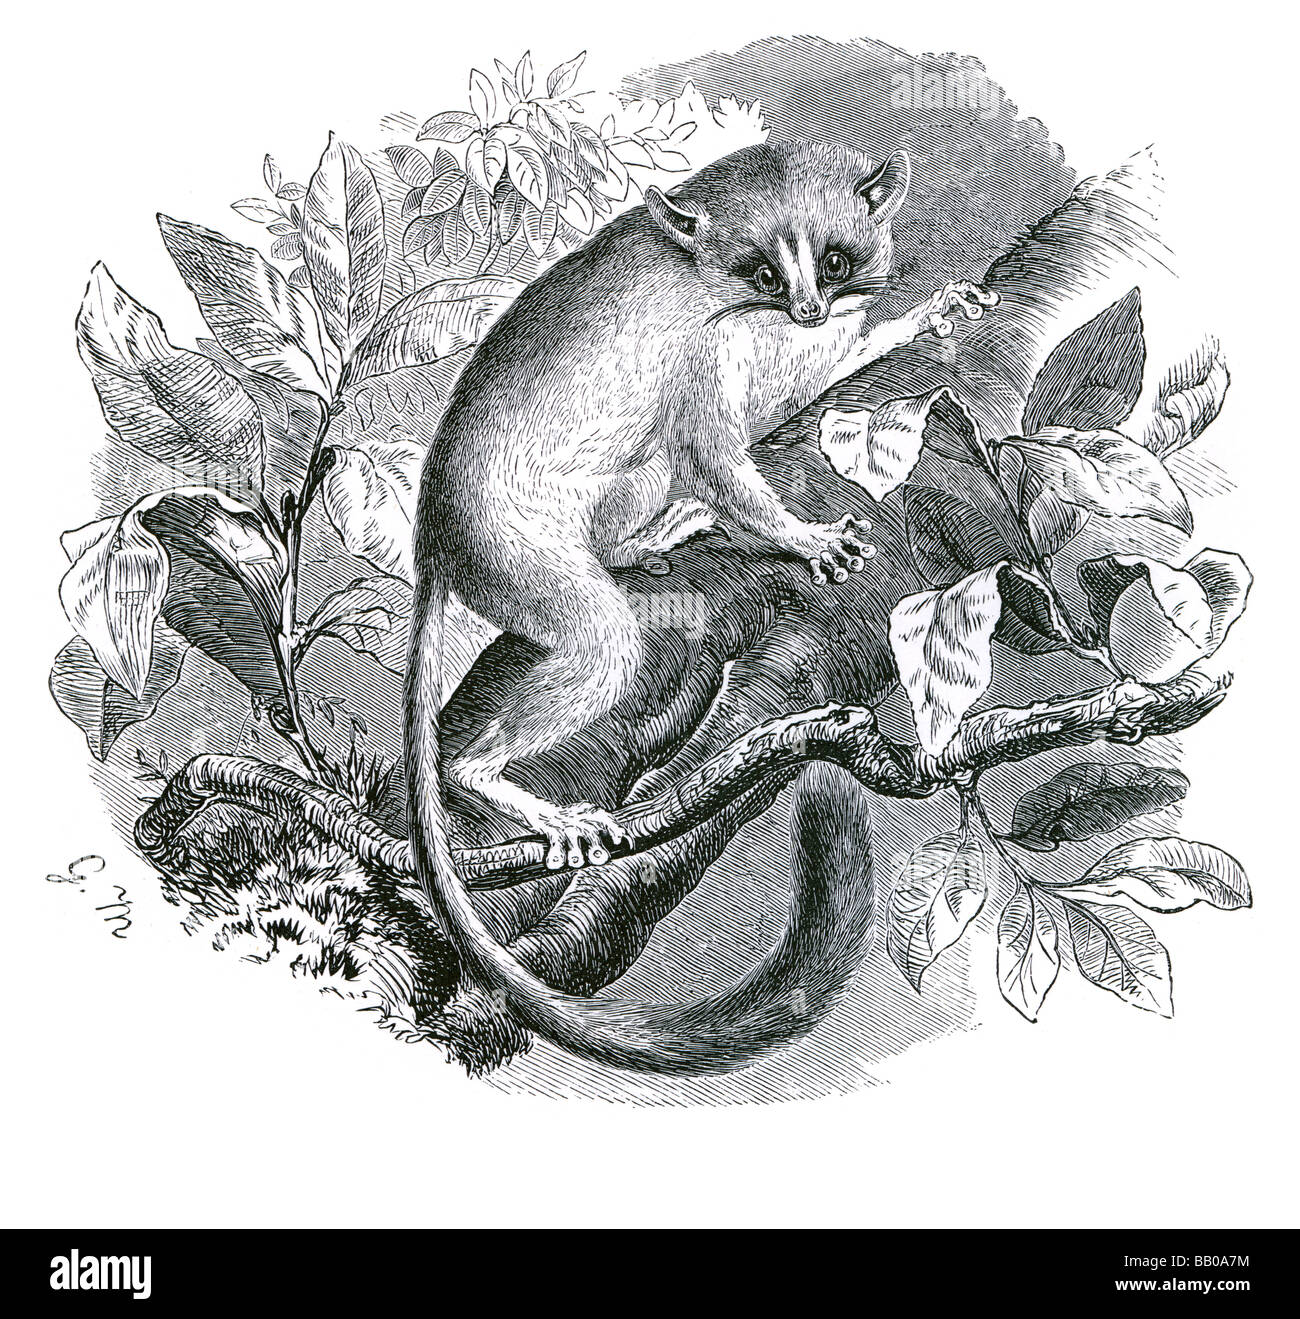 the murine mouse lemur Lemuridae Lemuriformes primate strepsirrhines lemures wailing cries reflective eyes lemuriform catta flyi Stock Photo